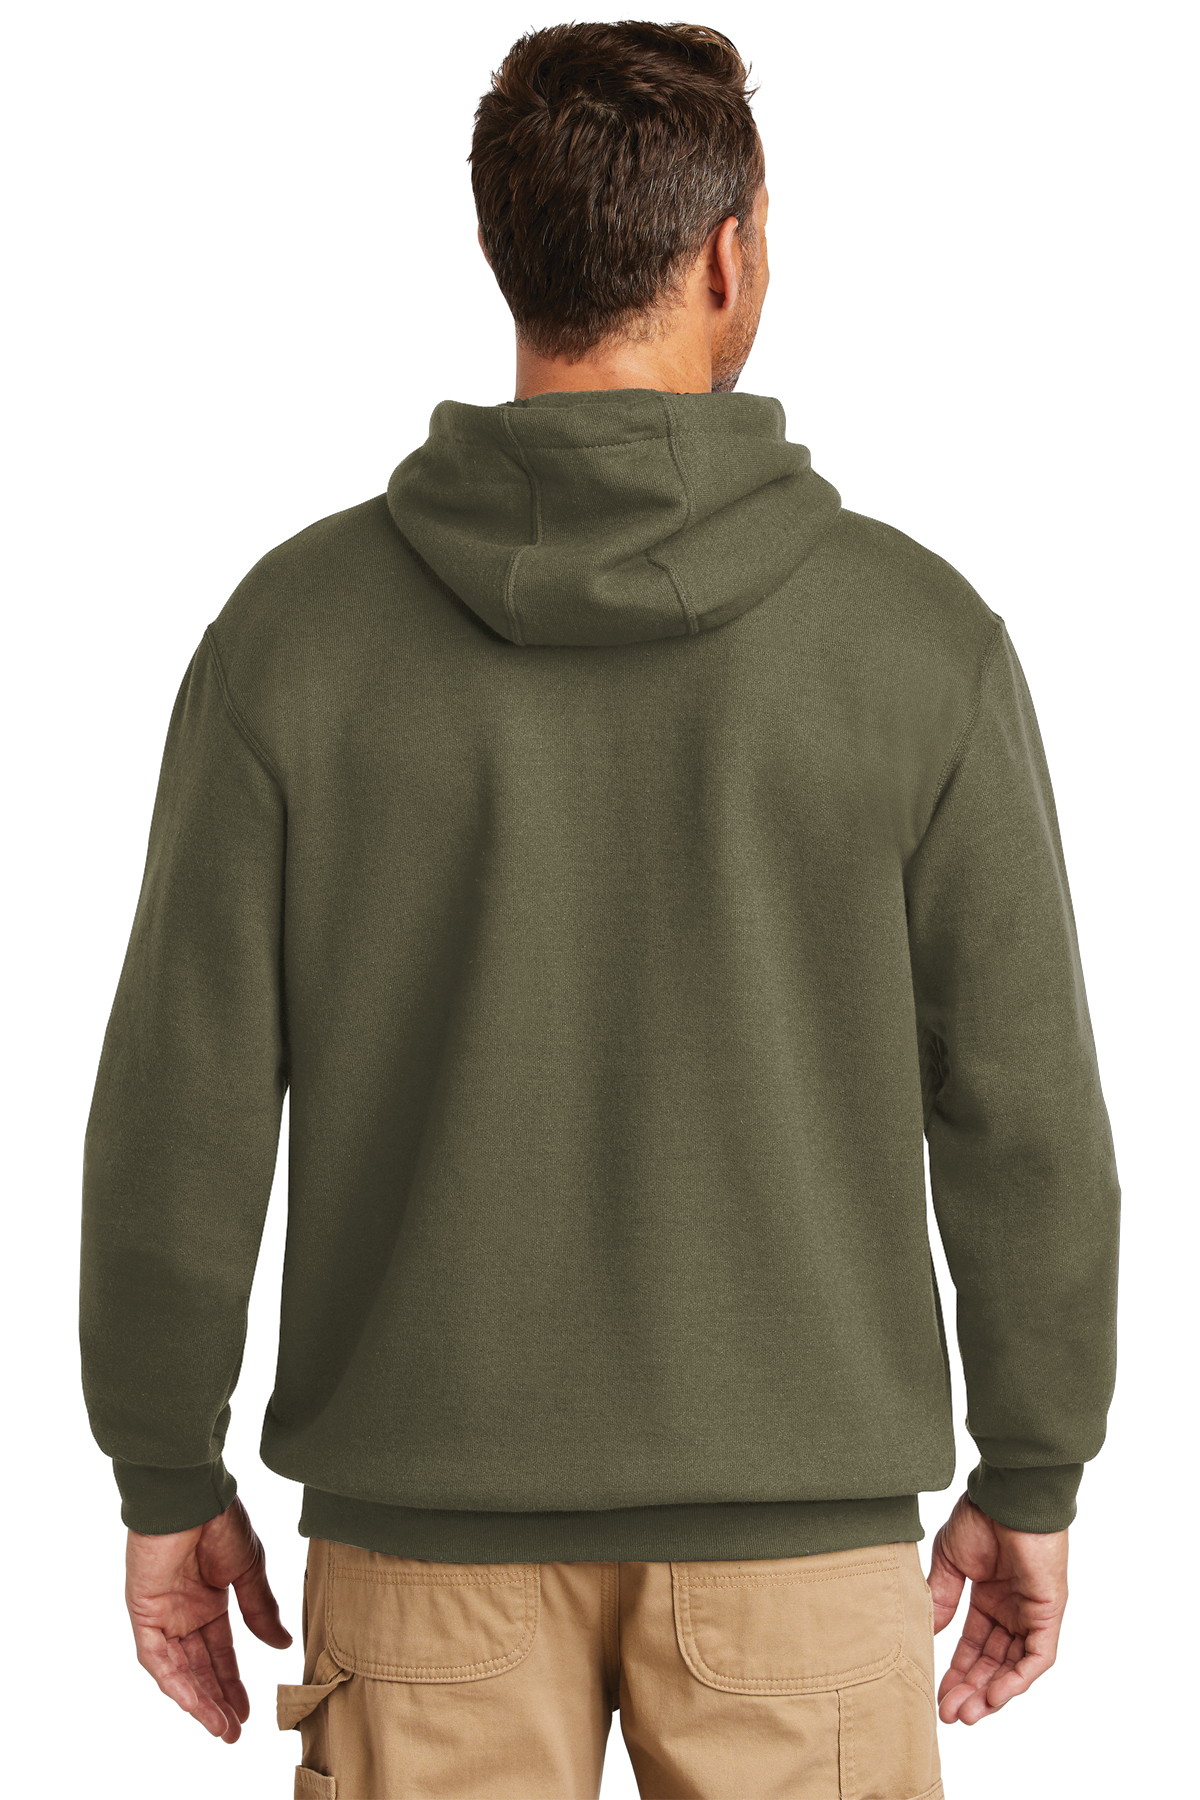 Carhartt Tall Midweight Hooded Sweatshirt, Product